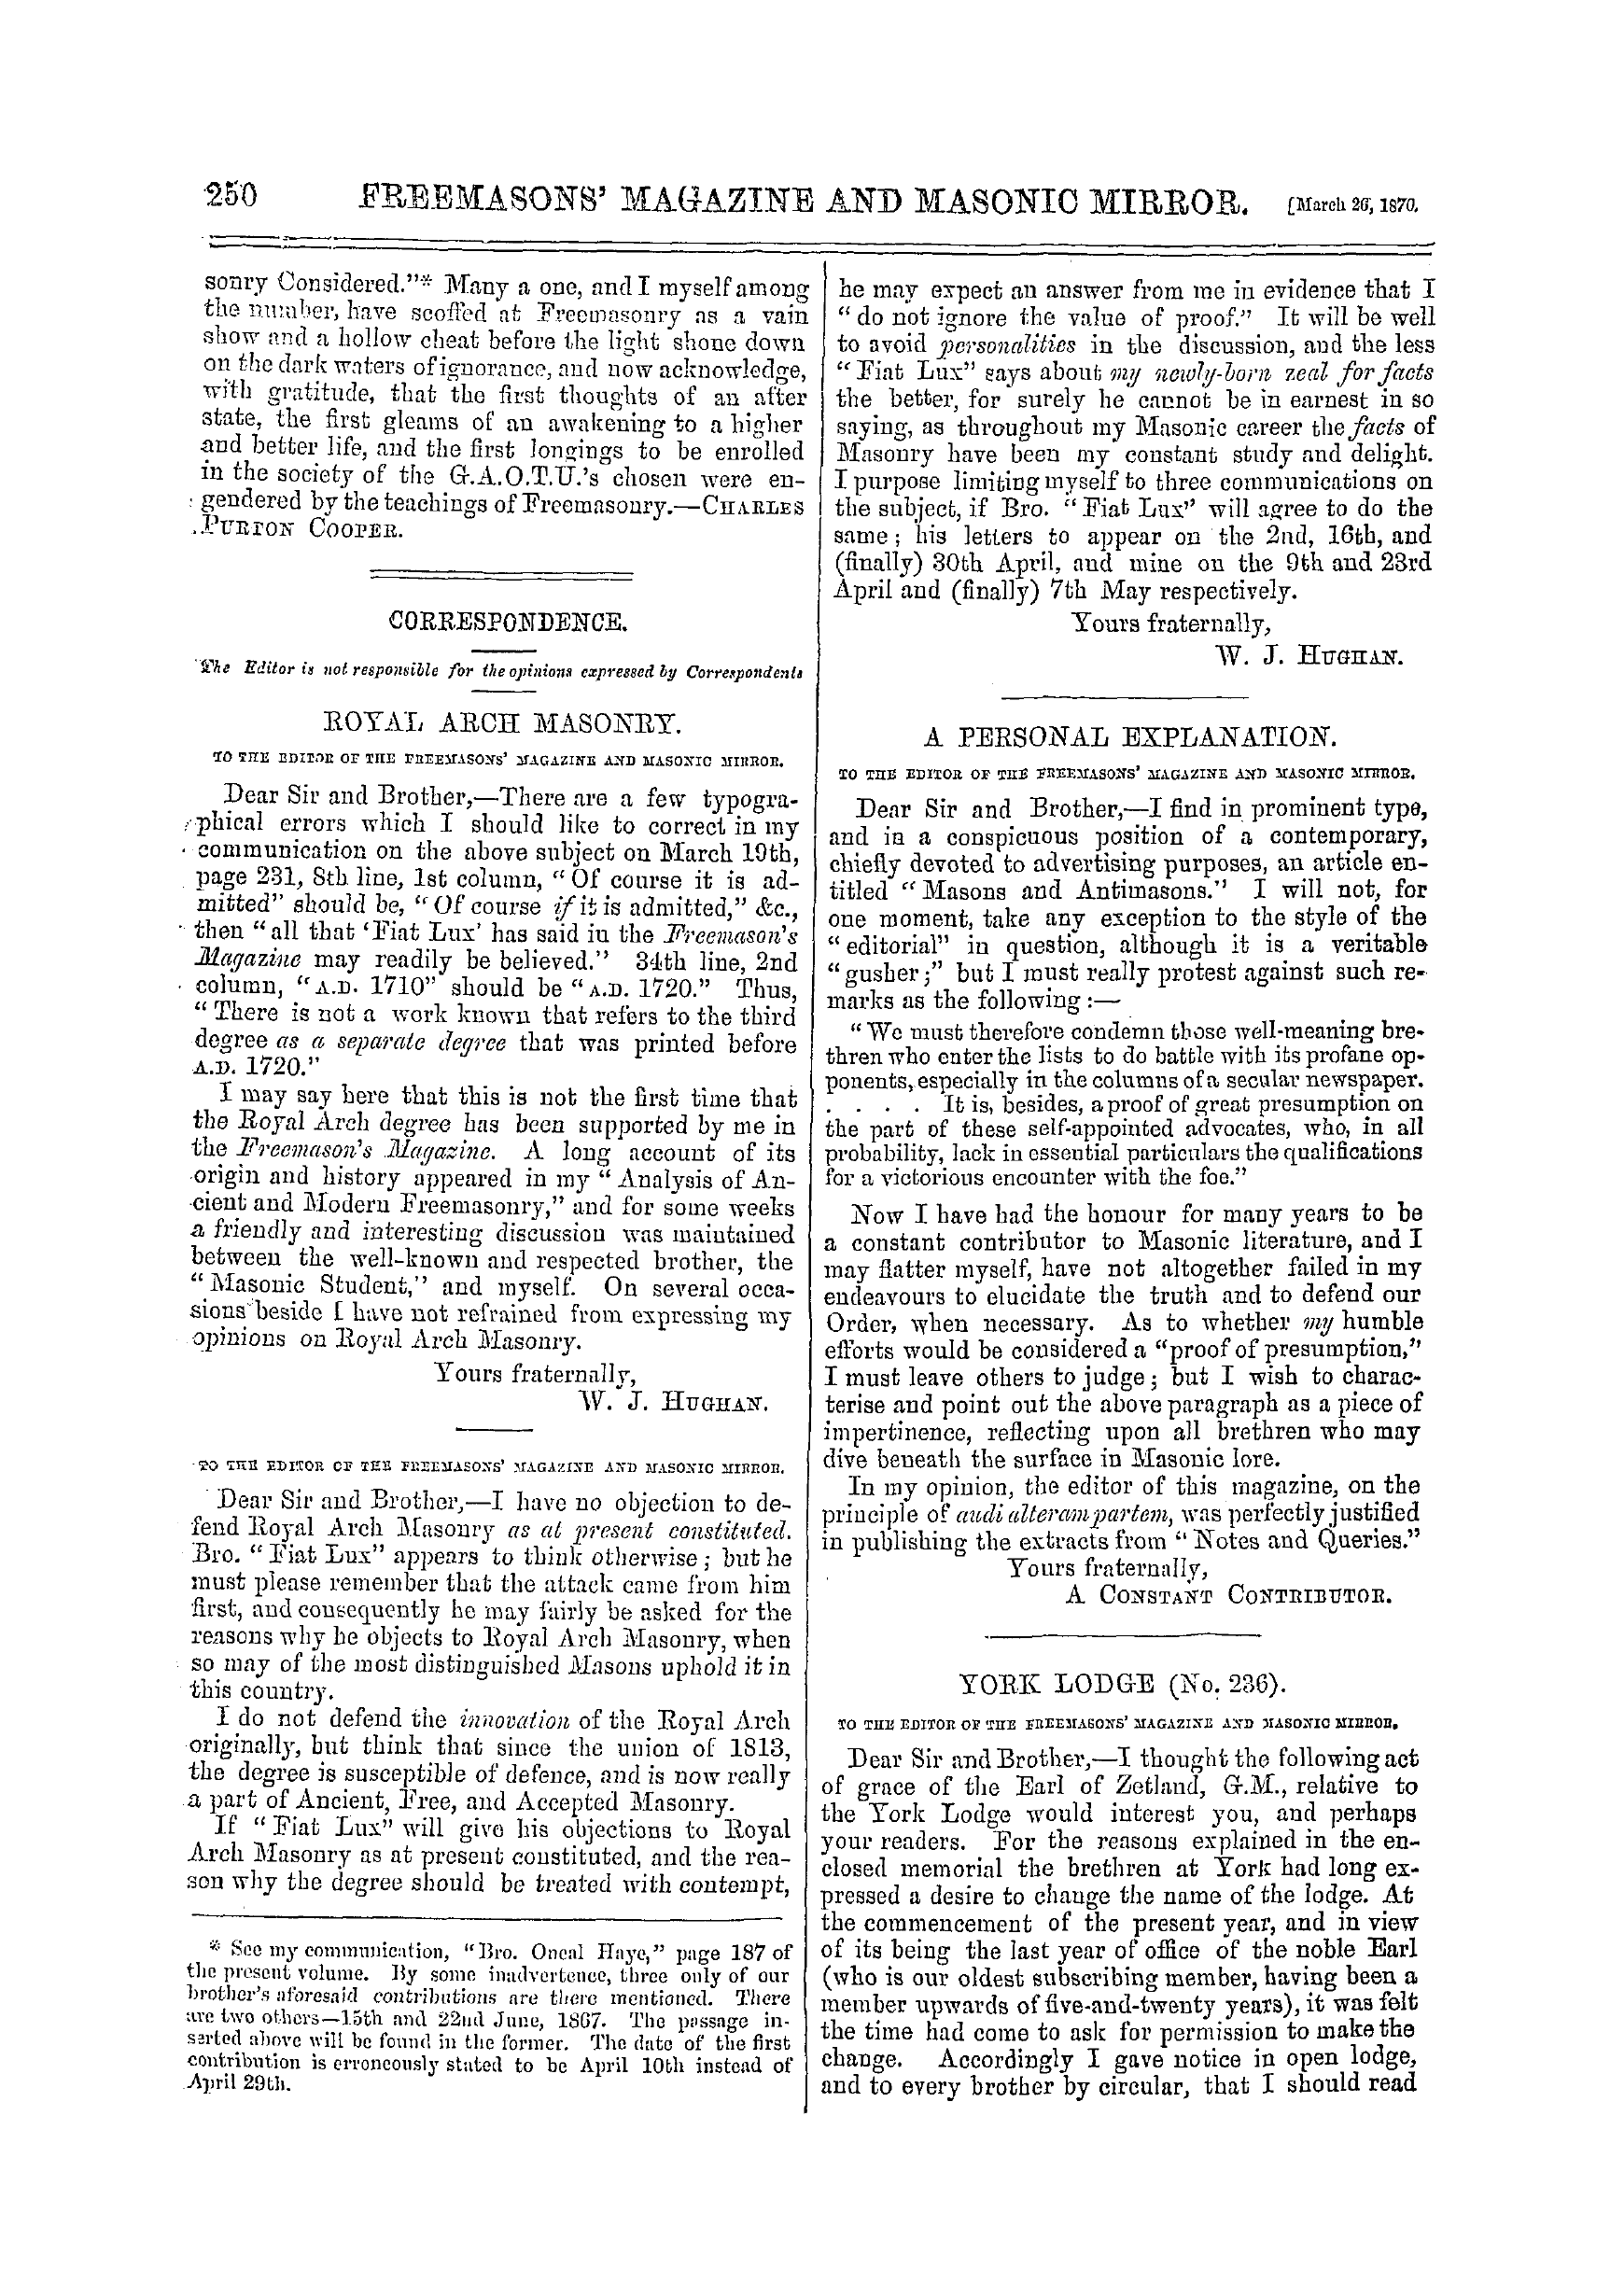 The Freemasons' Monthly Magazine: 1870-03-26 - Correspondence.